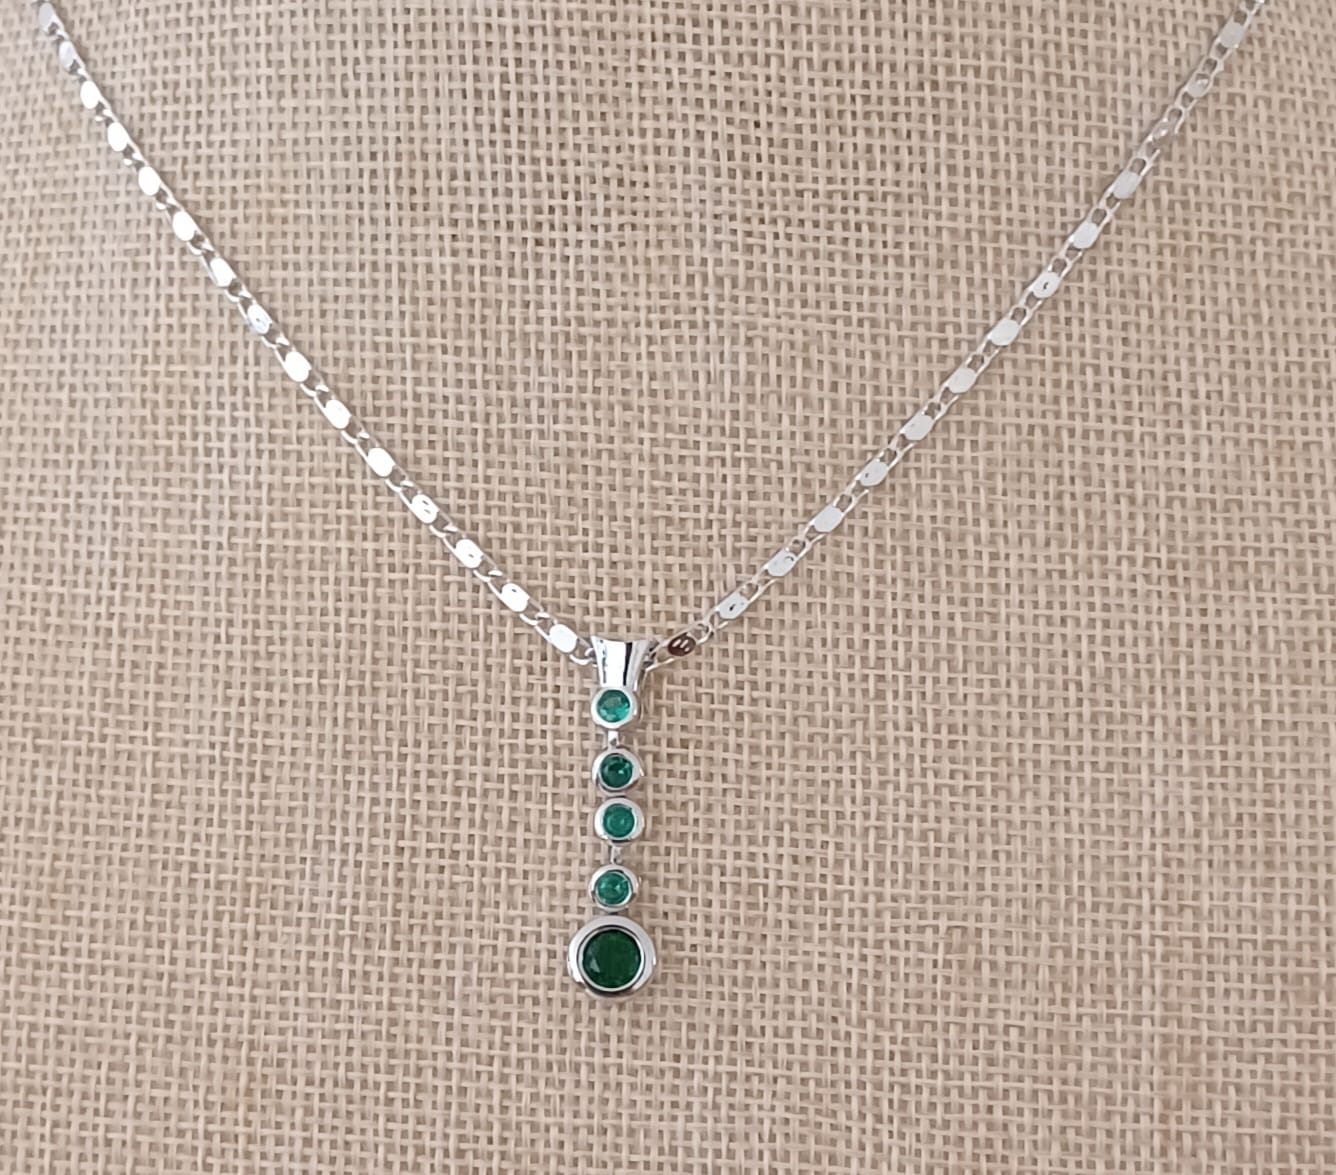 Rodium necklace, green zircon with studs